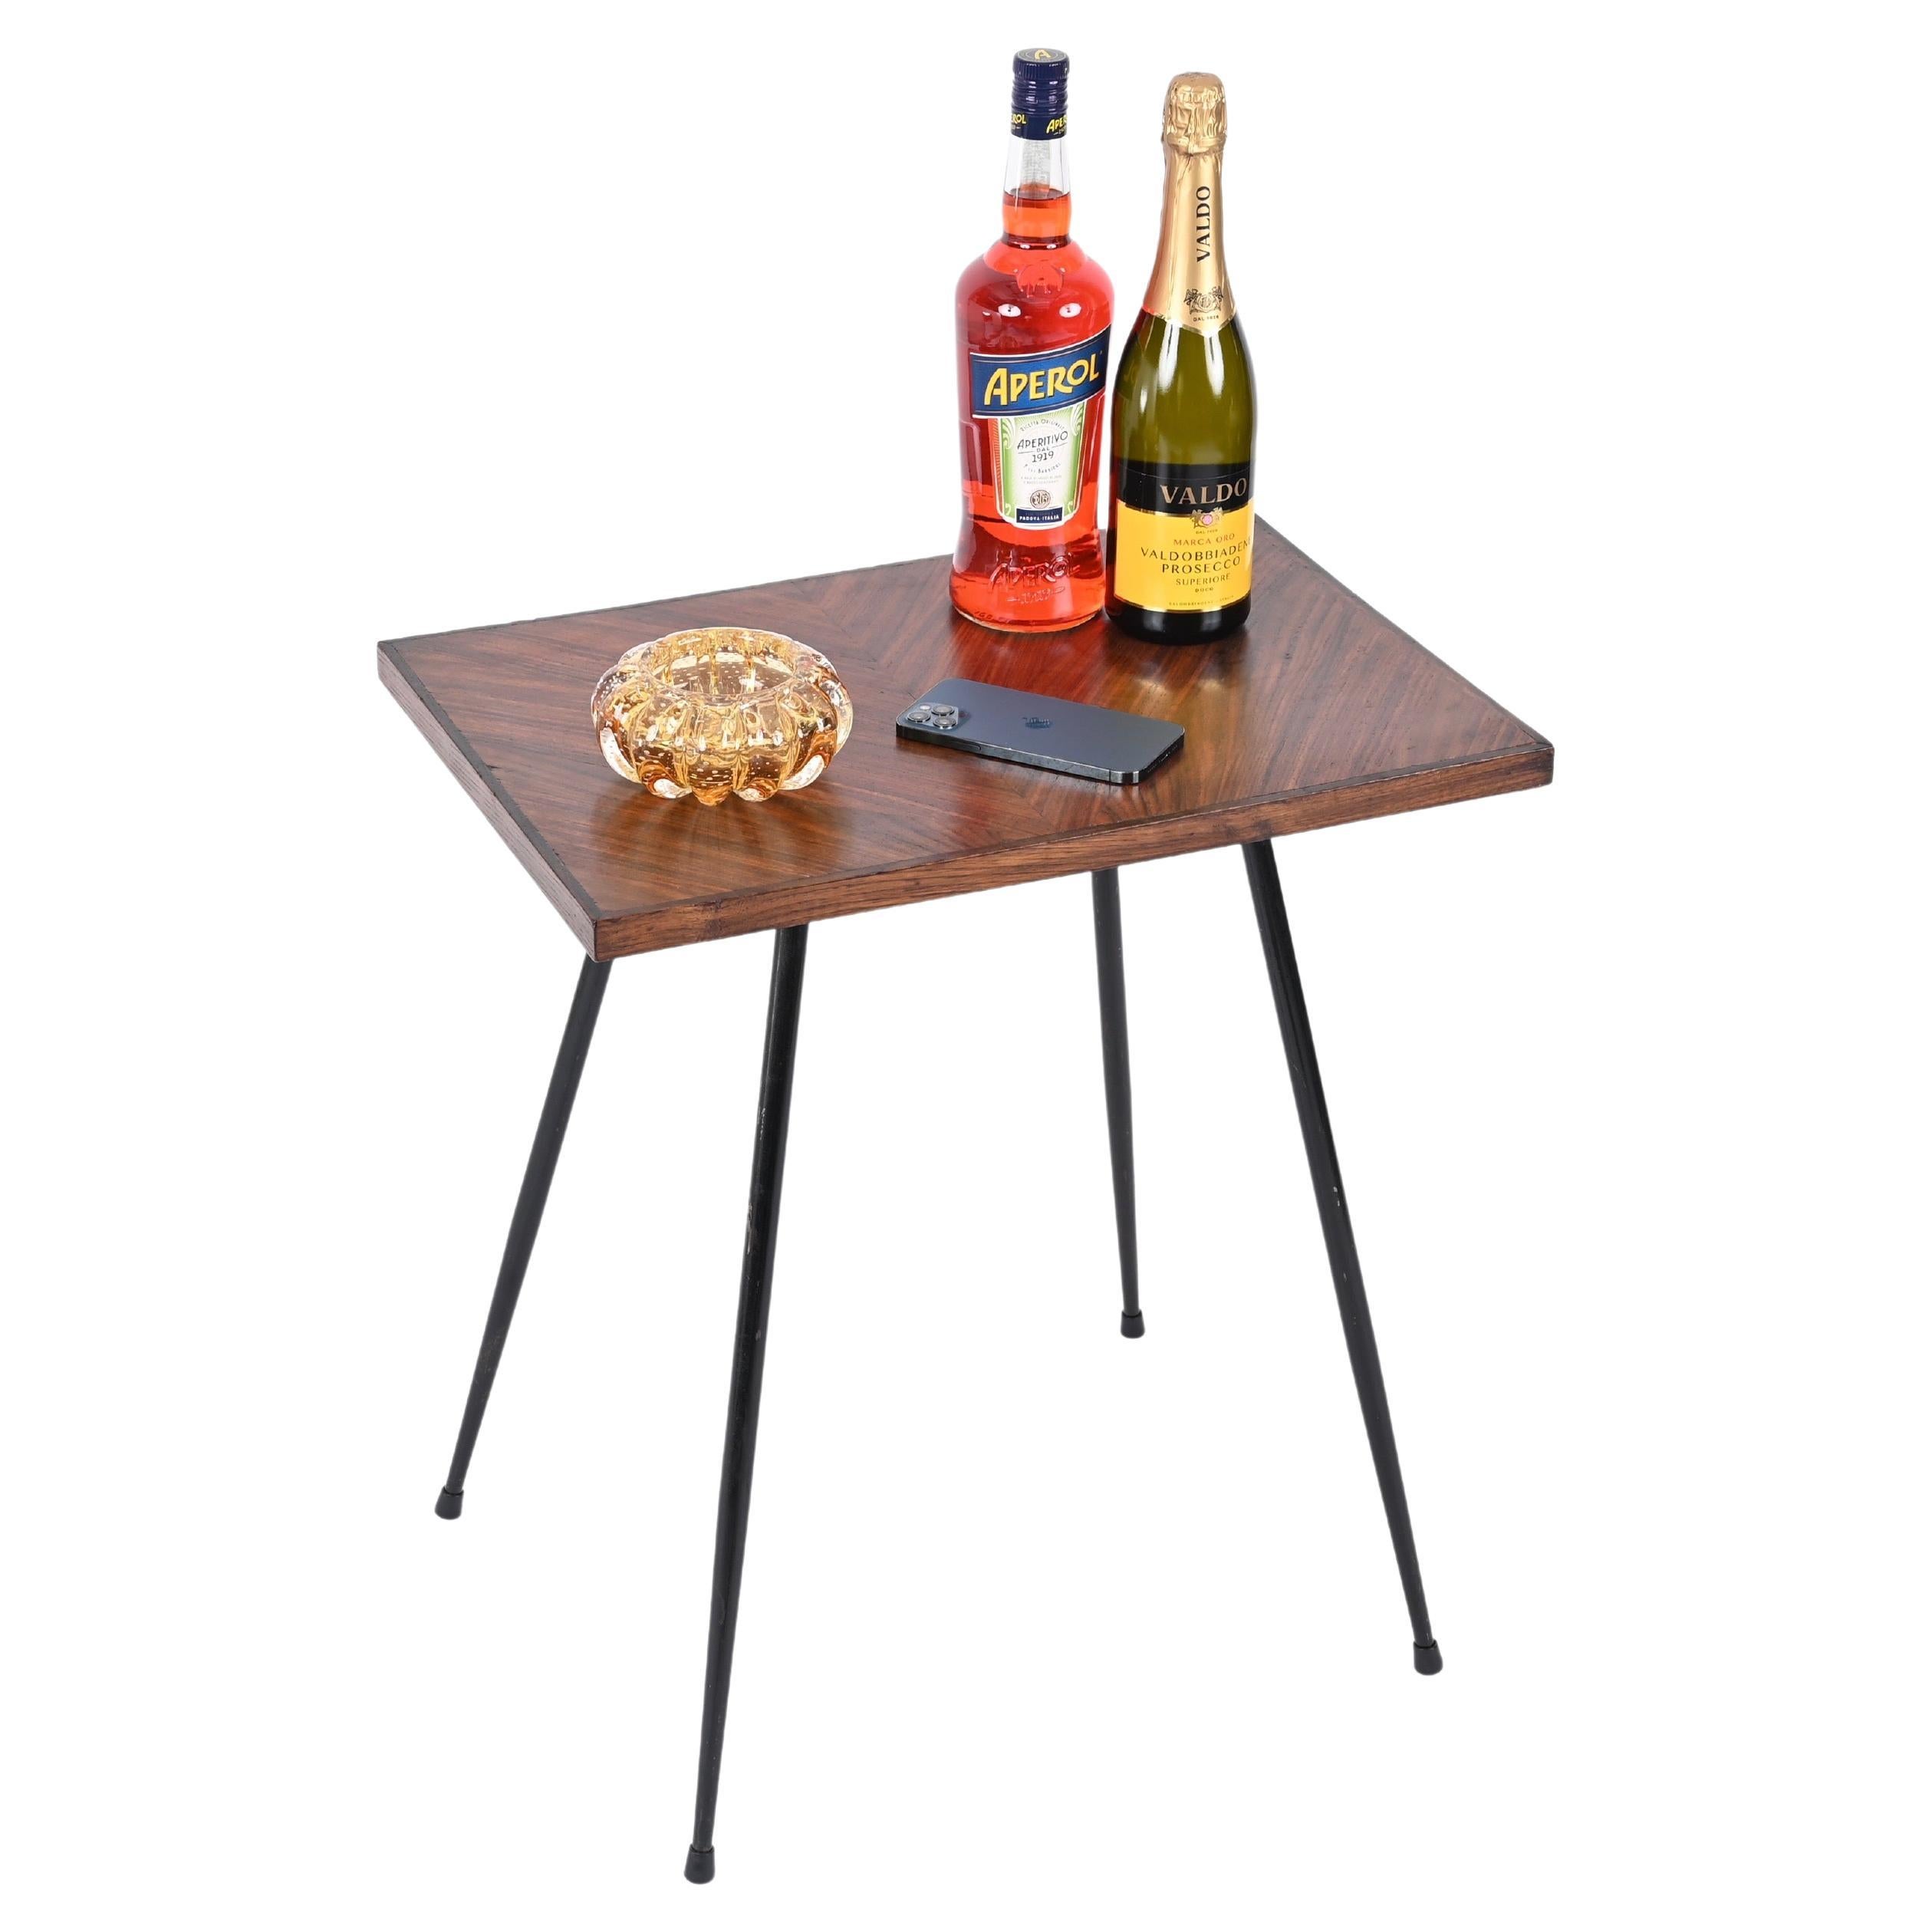 Italian Midcentury Rectangular Side Table in Teak Wood and Enameled Metal, 1950s For Sale